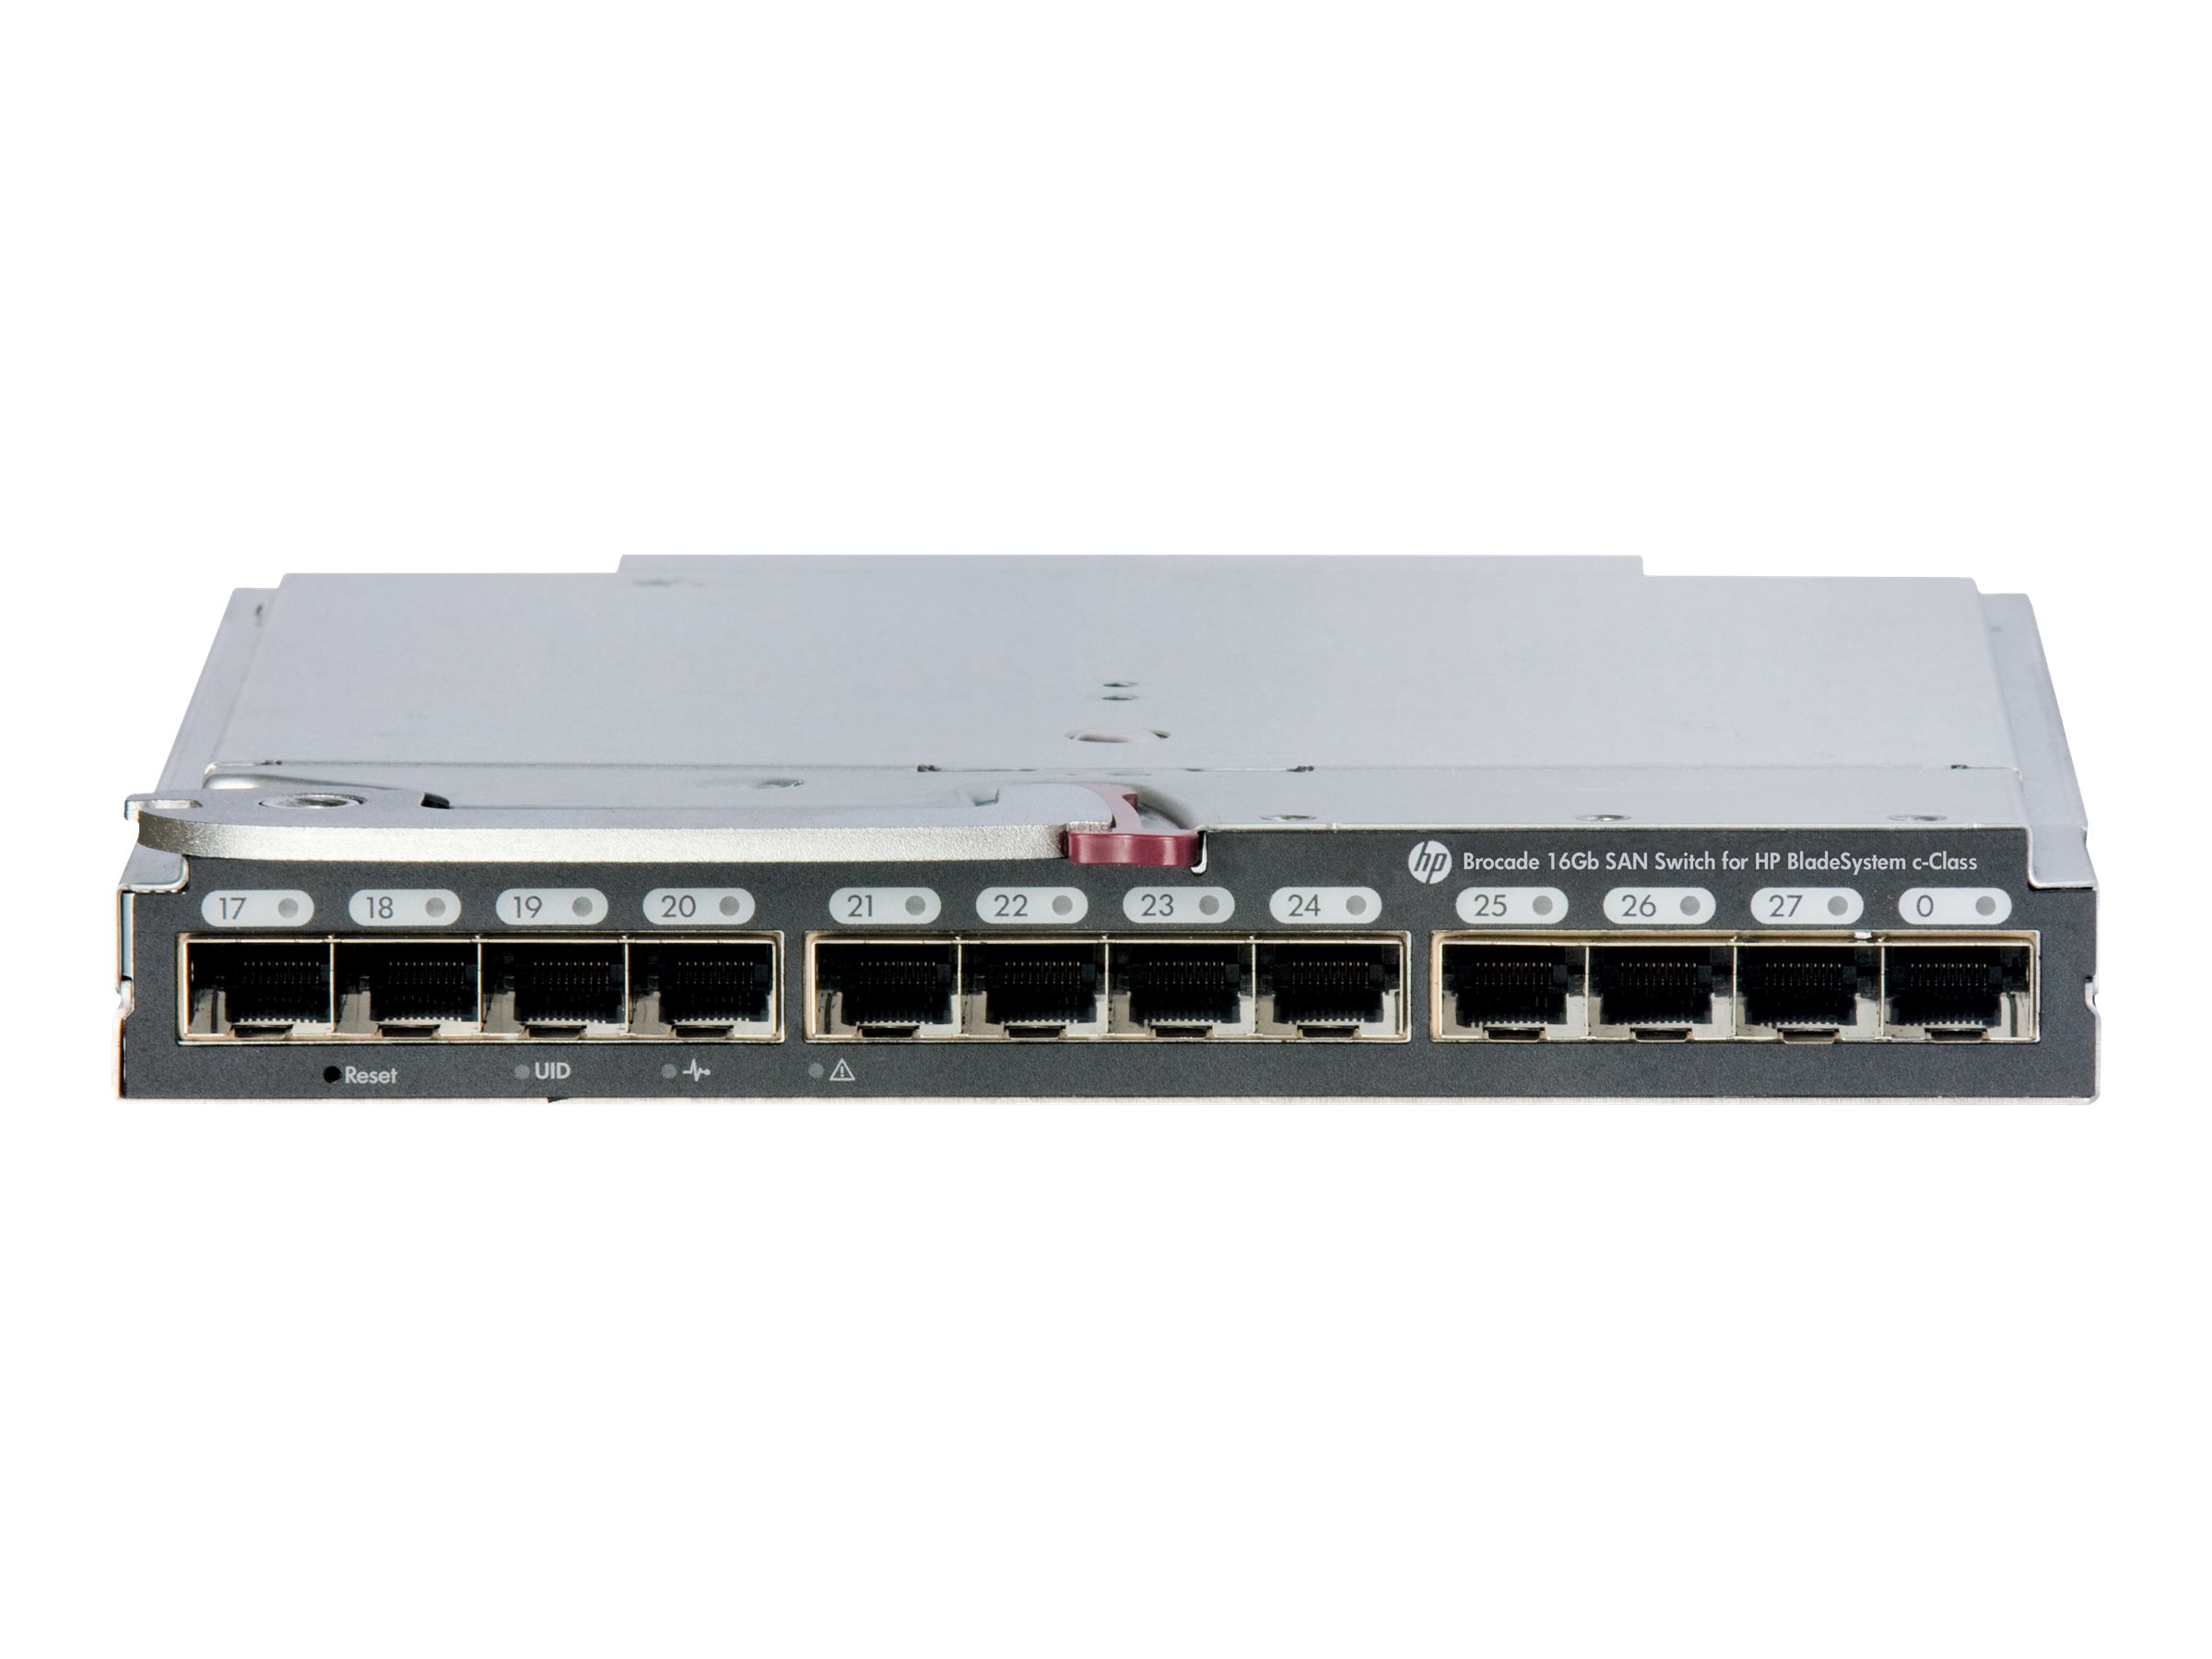 HP Enterprise Brocade 16Gb/28 SAN Switch for HP BladeSystem c-Class - Switch - verwaltet - 16 x 16Gb Fibre Channel (intern) (C8S46B)